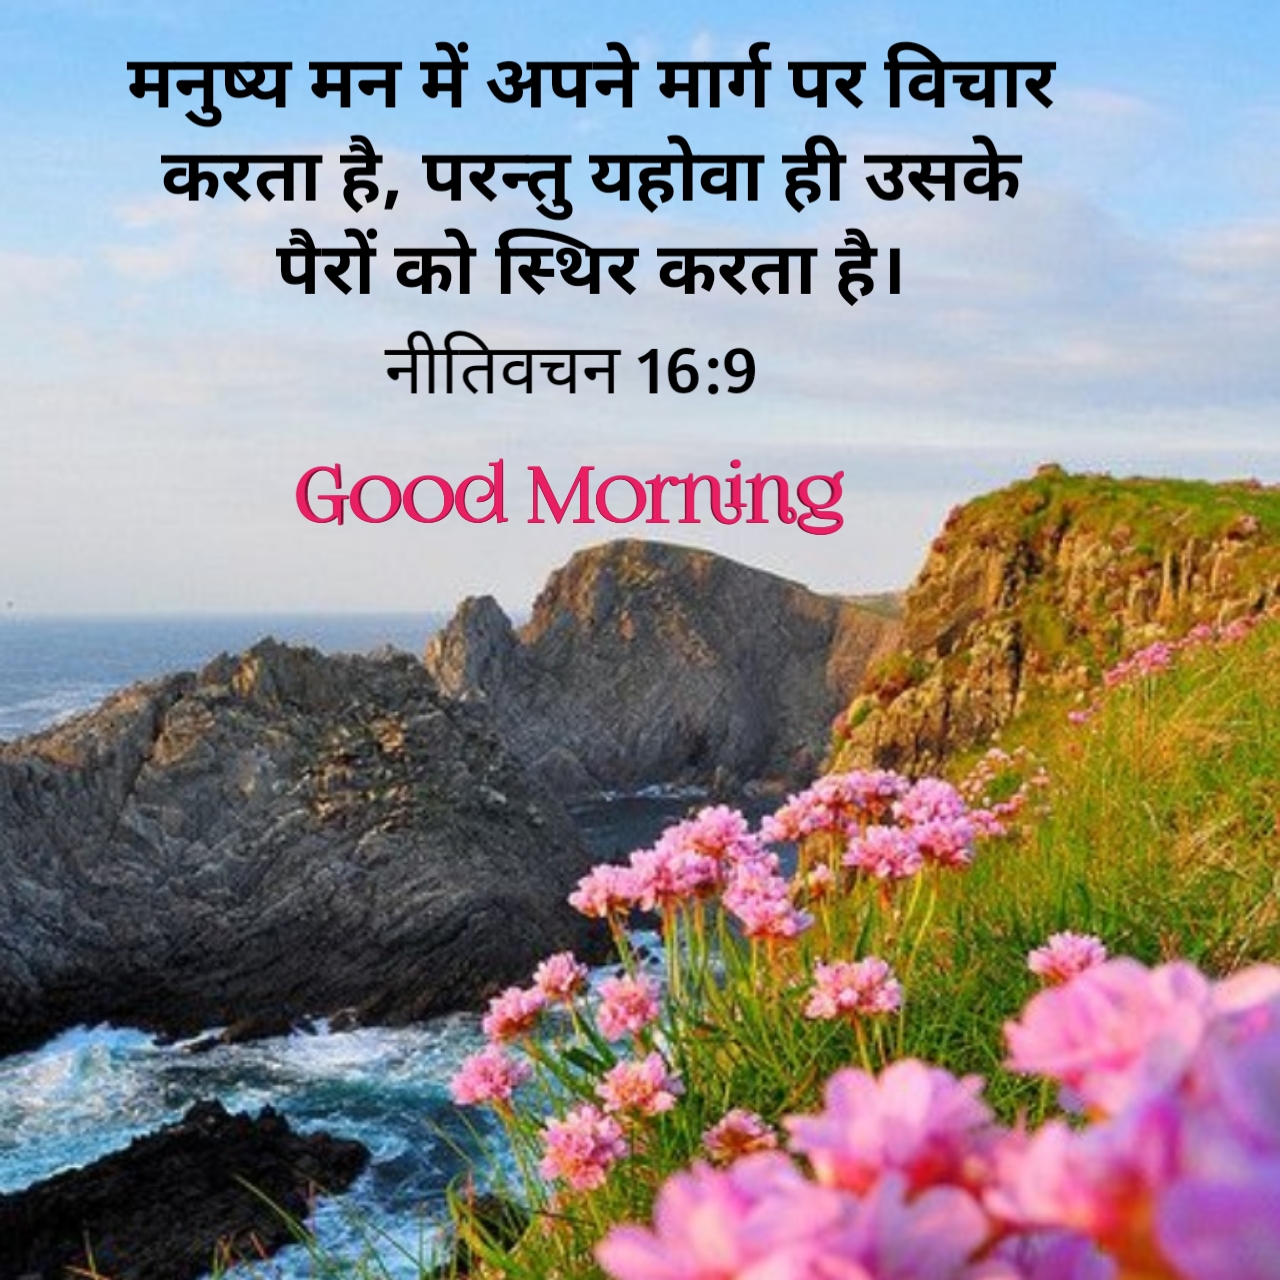 Good Morning Bible Quotes In Hindi